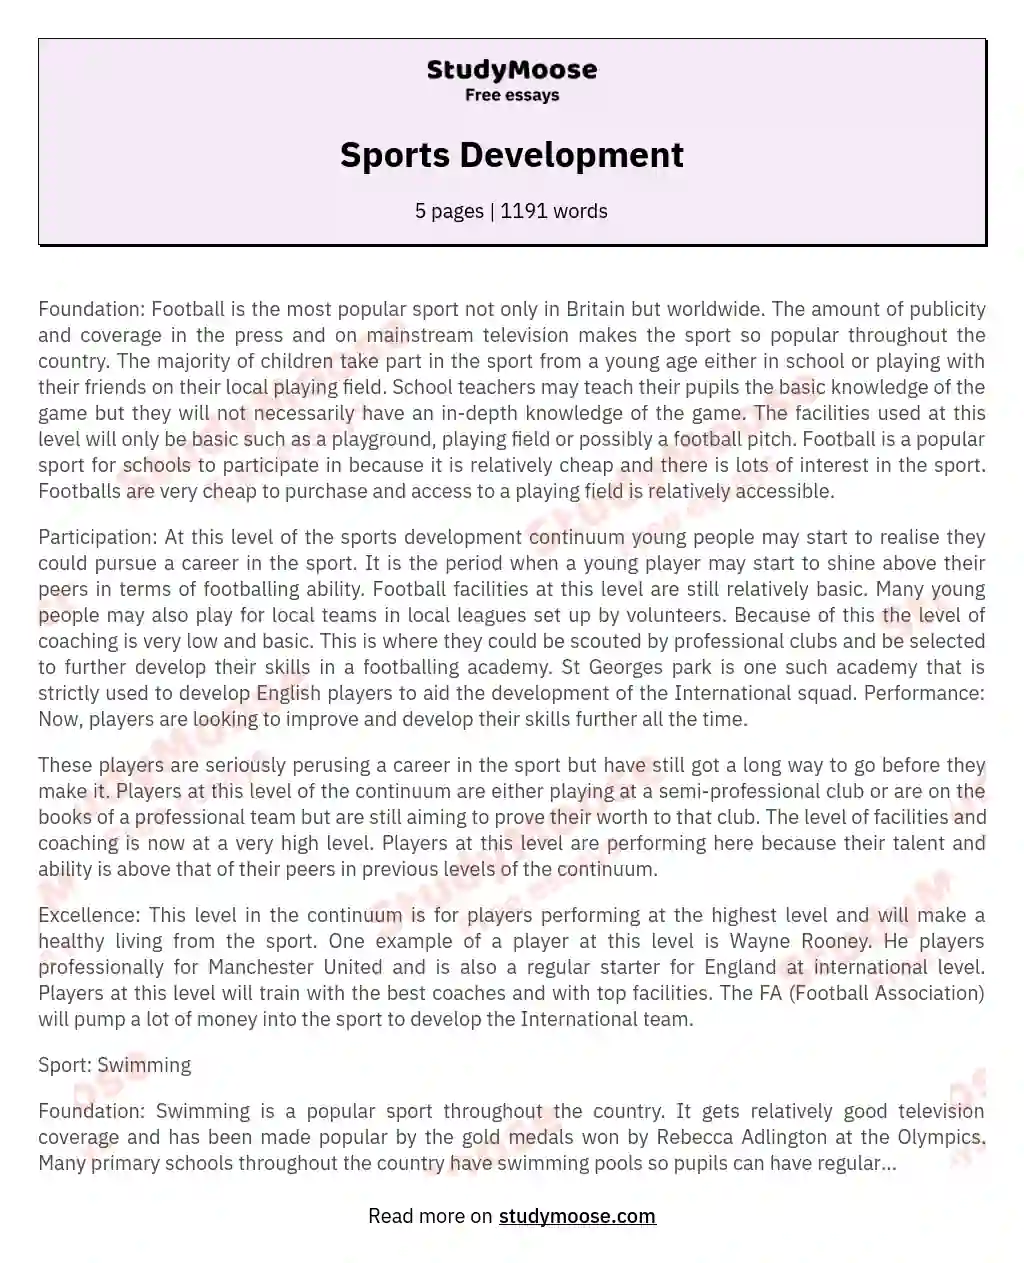 Sports Development essay